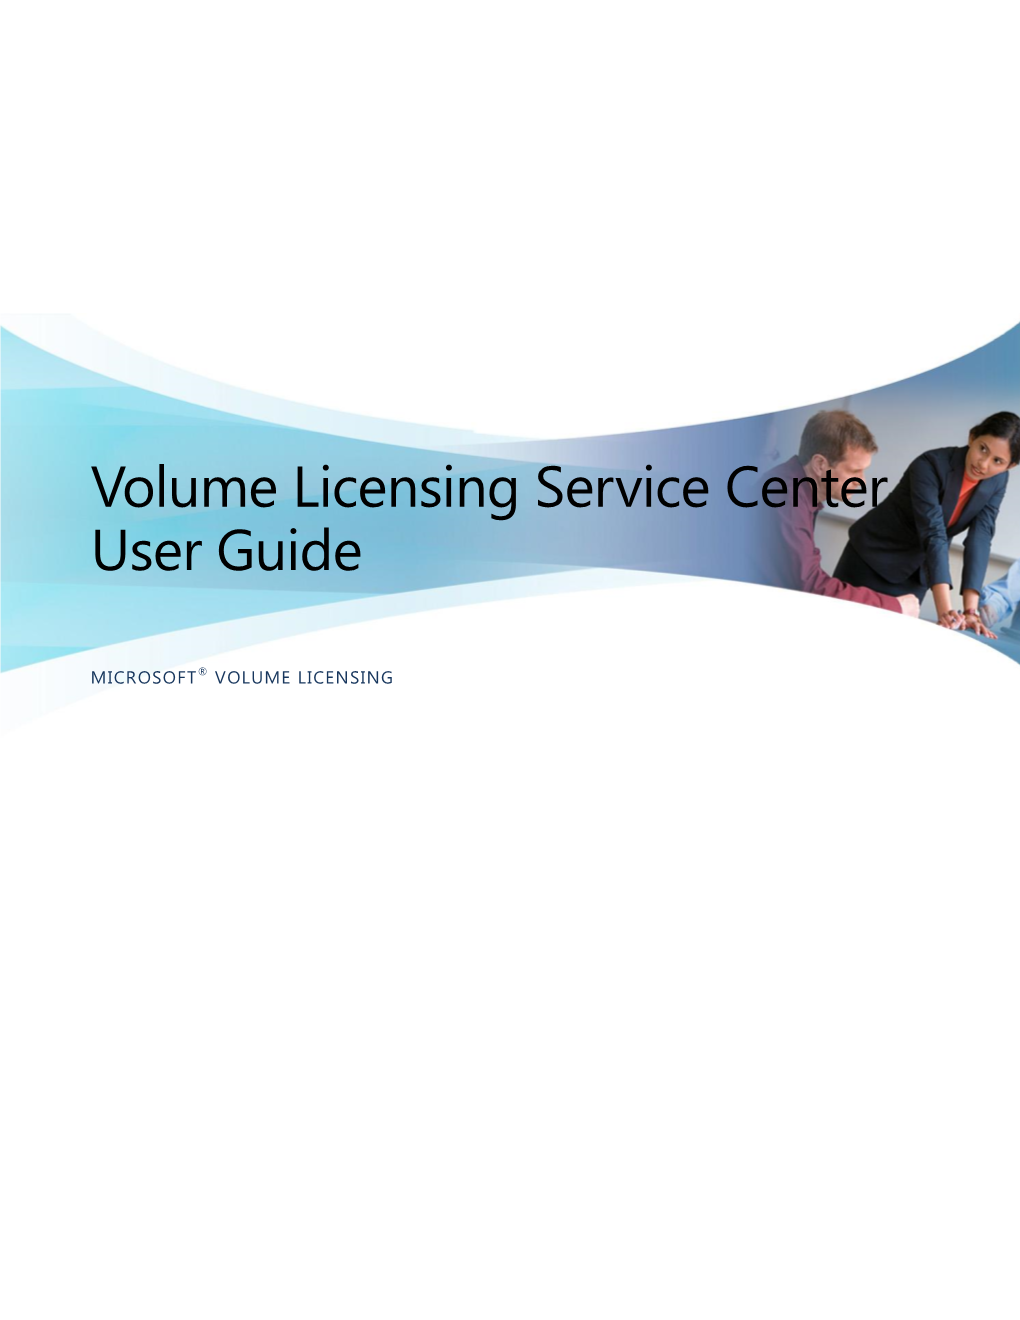 Volume Licensing Service Center User Guide